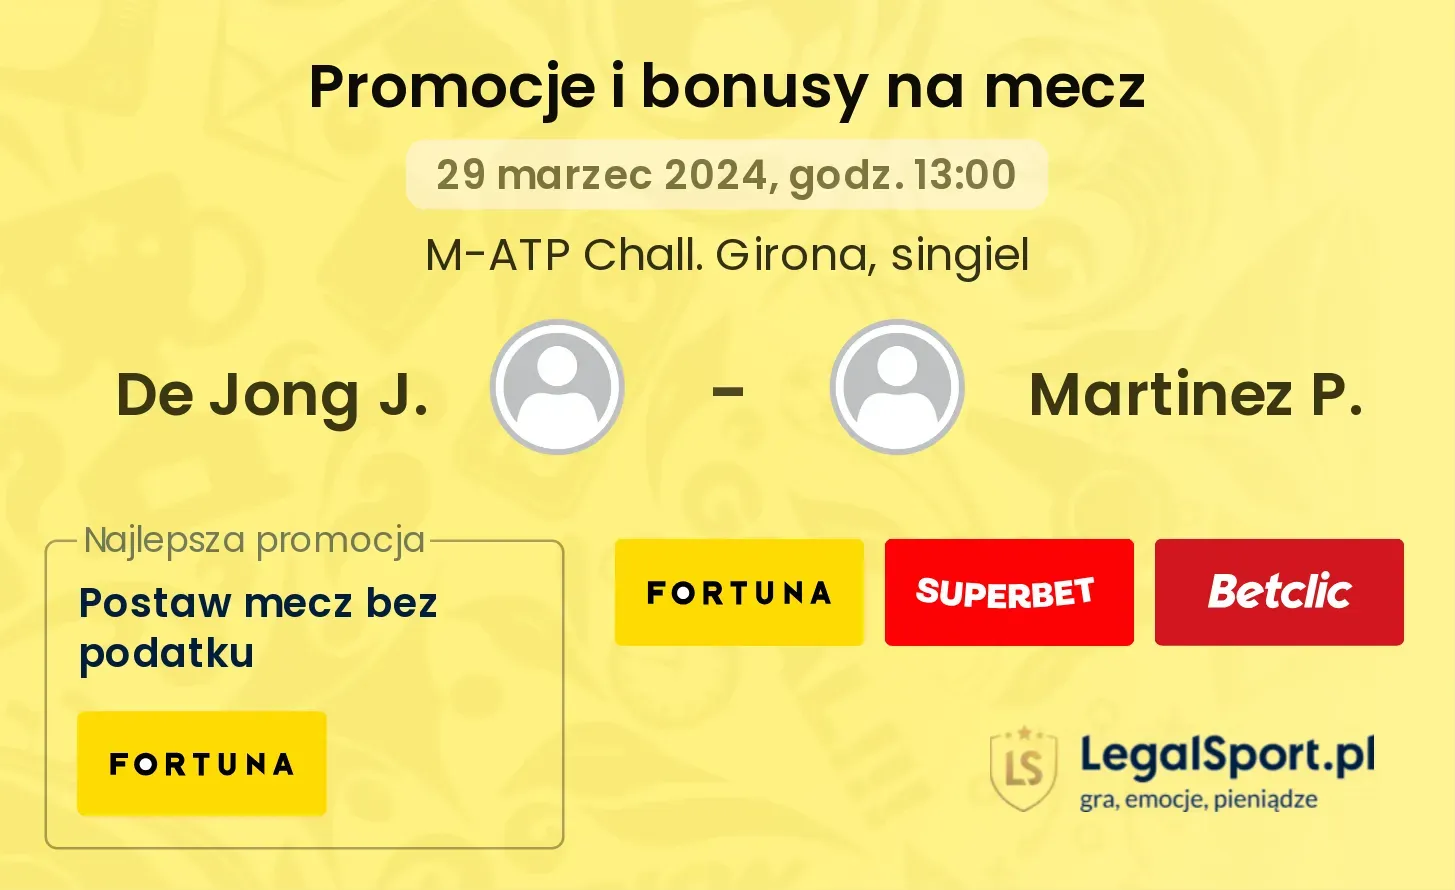 De Jong J. - Martinez P. promocje bonusy na mecz